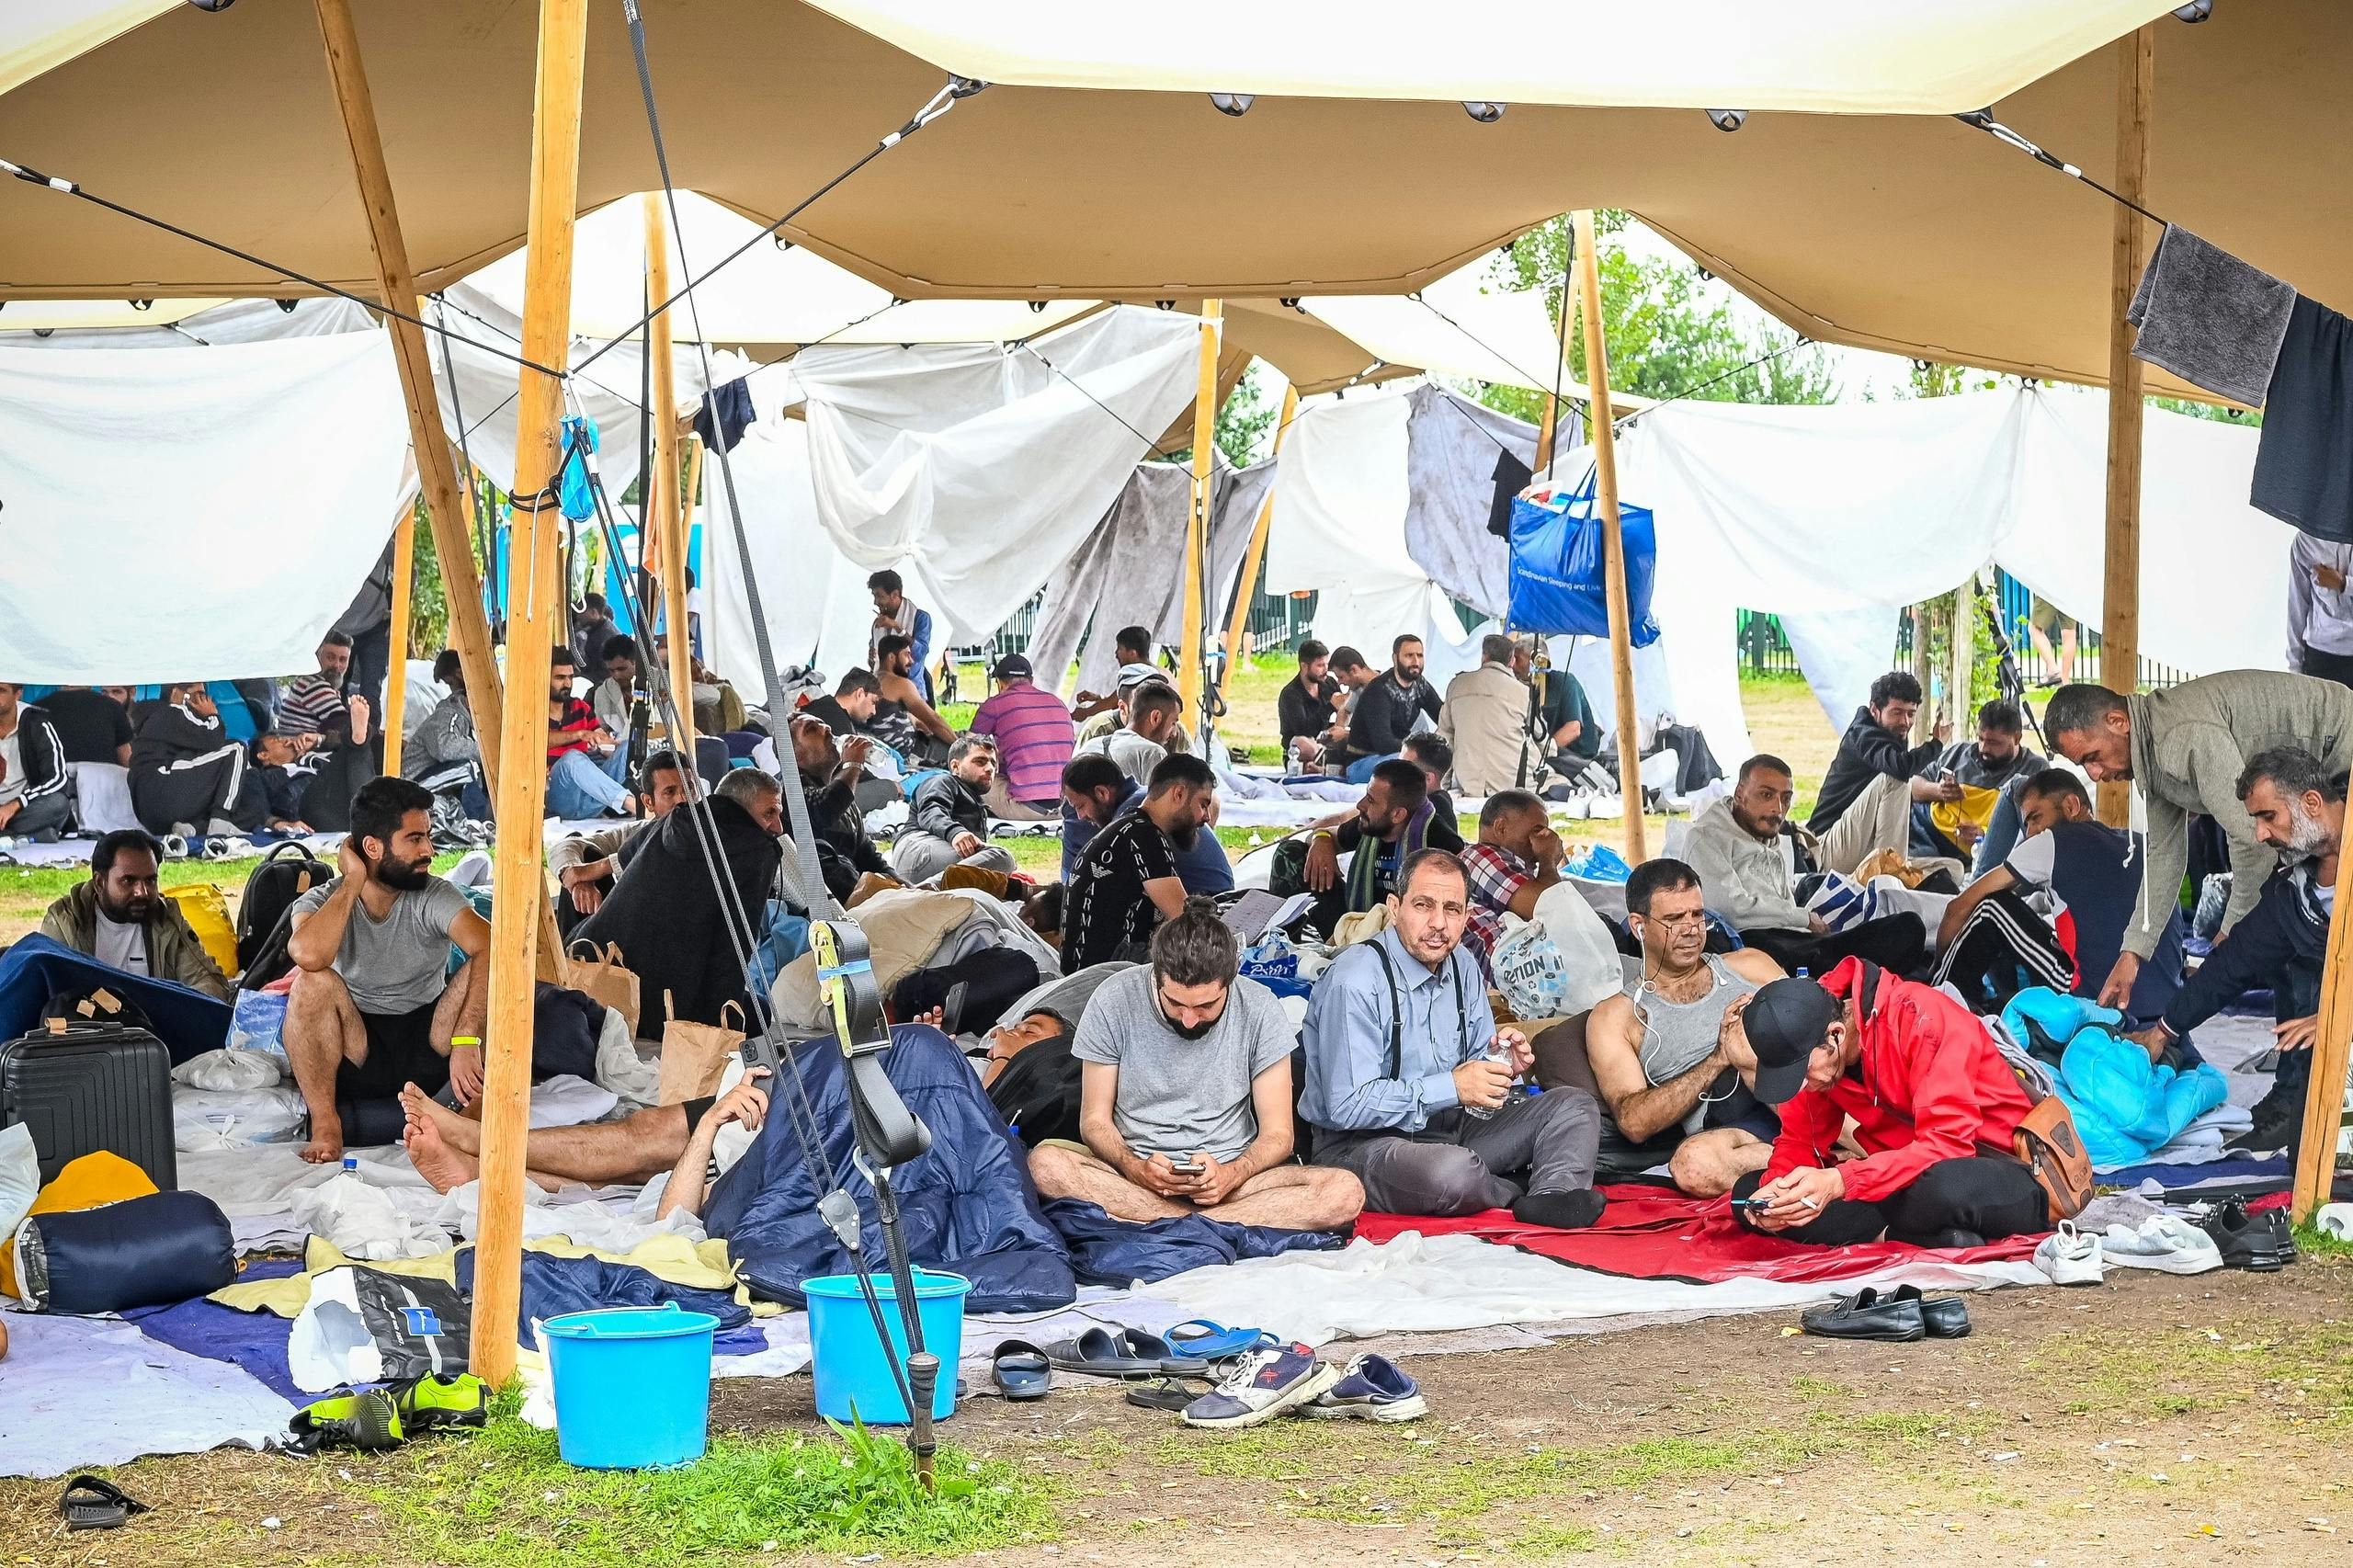 Foreign media report ‘inhuman’ asylum crisis